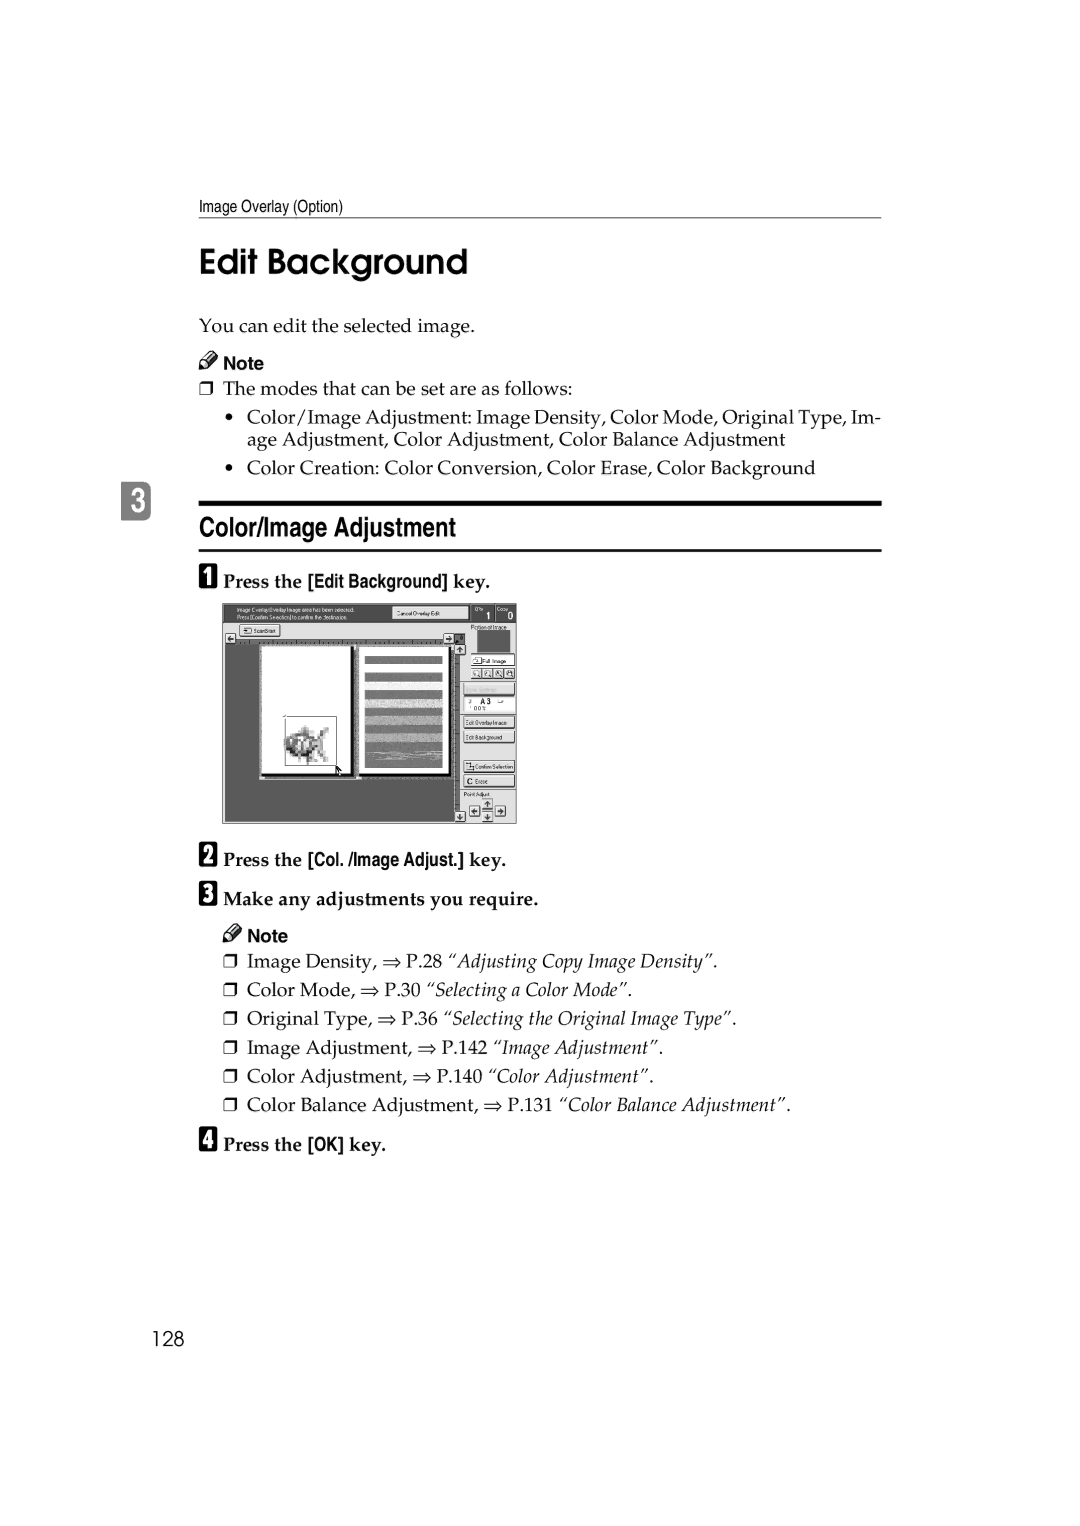 Ricoh 6513 manual Edit Background, Color/Image Adjustment, 128 